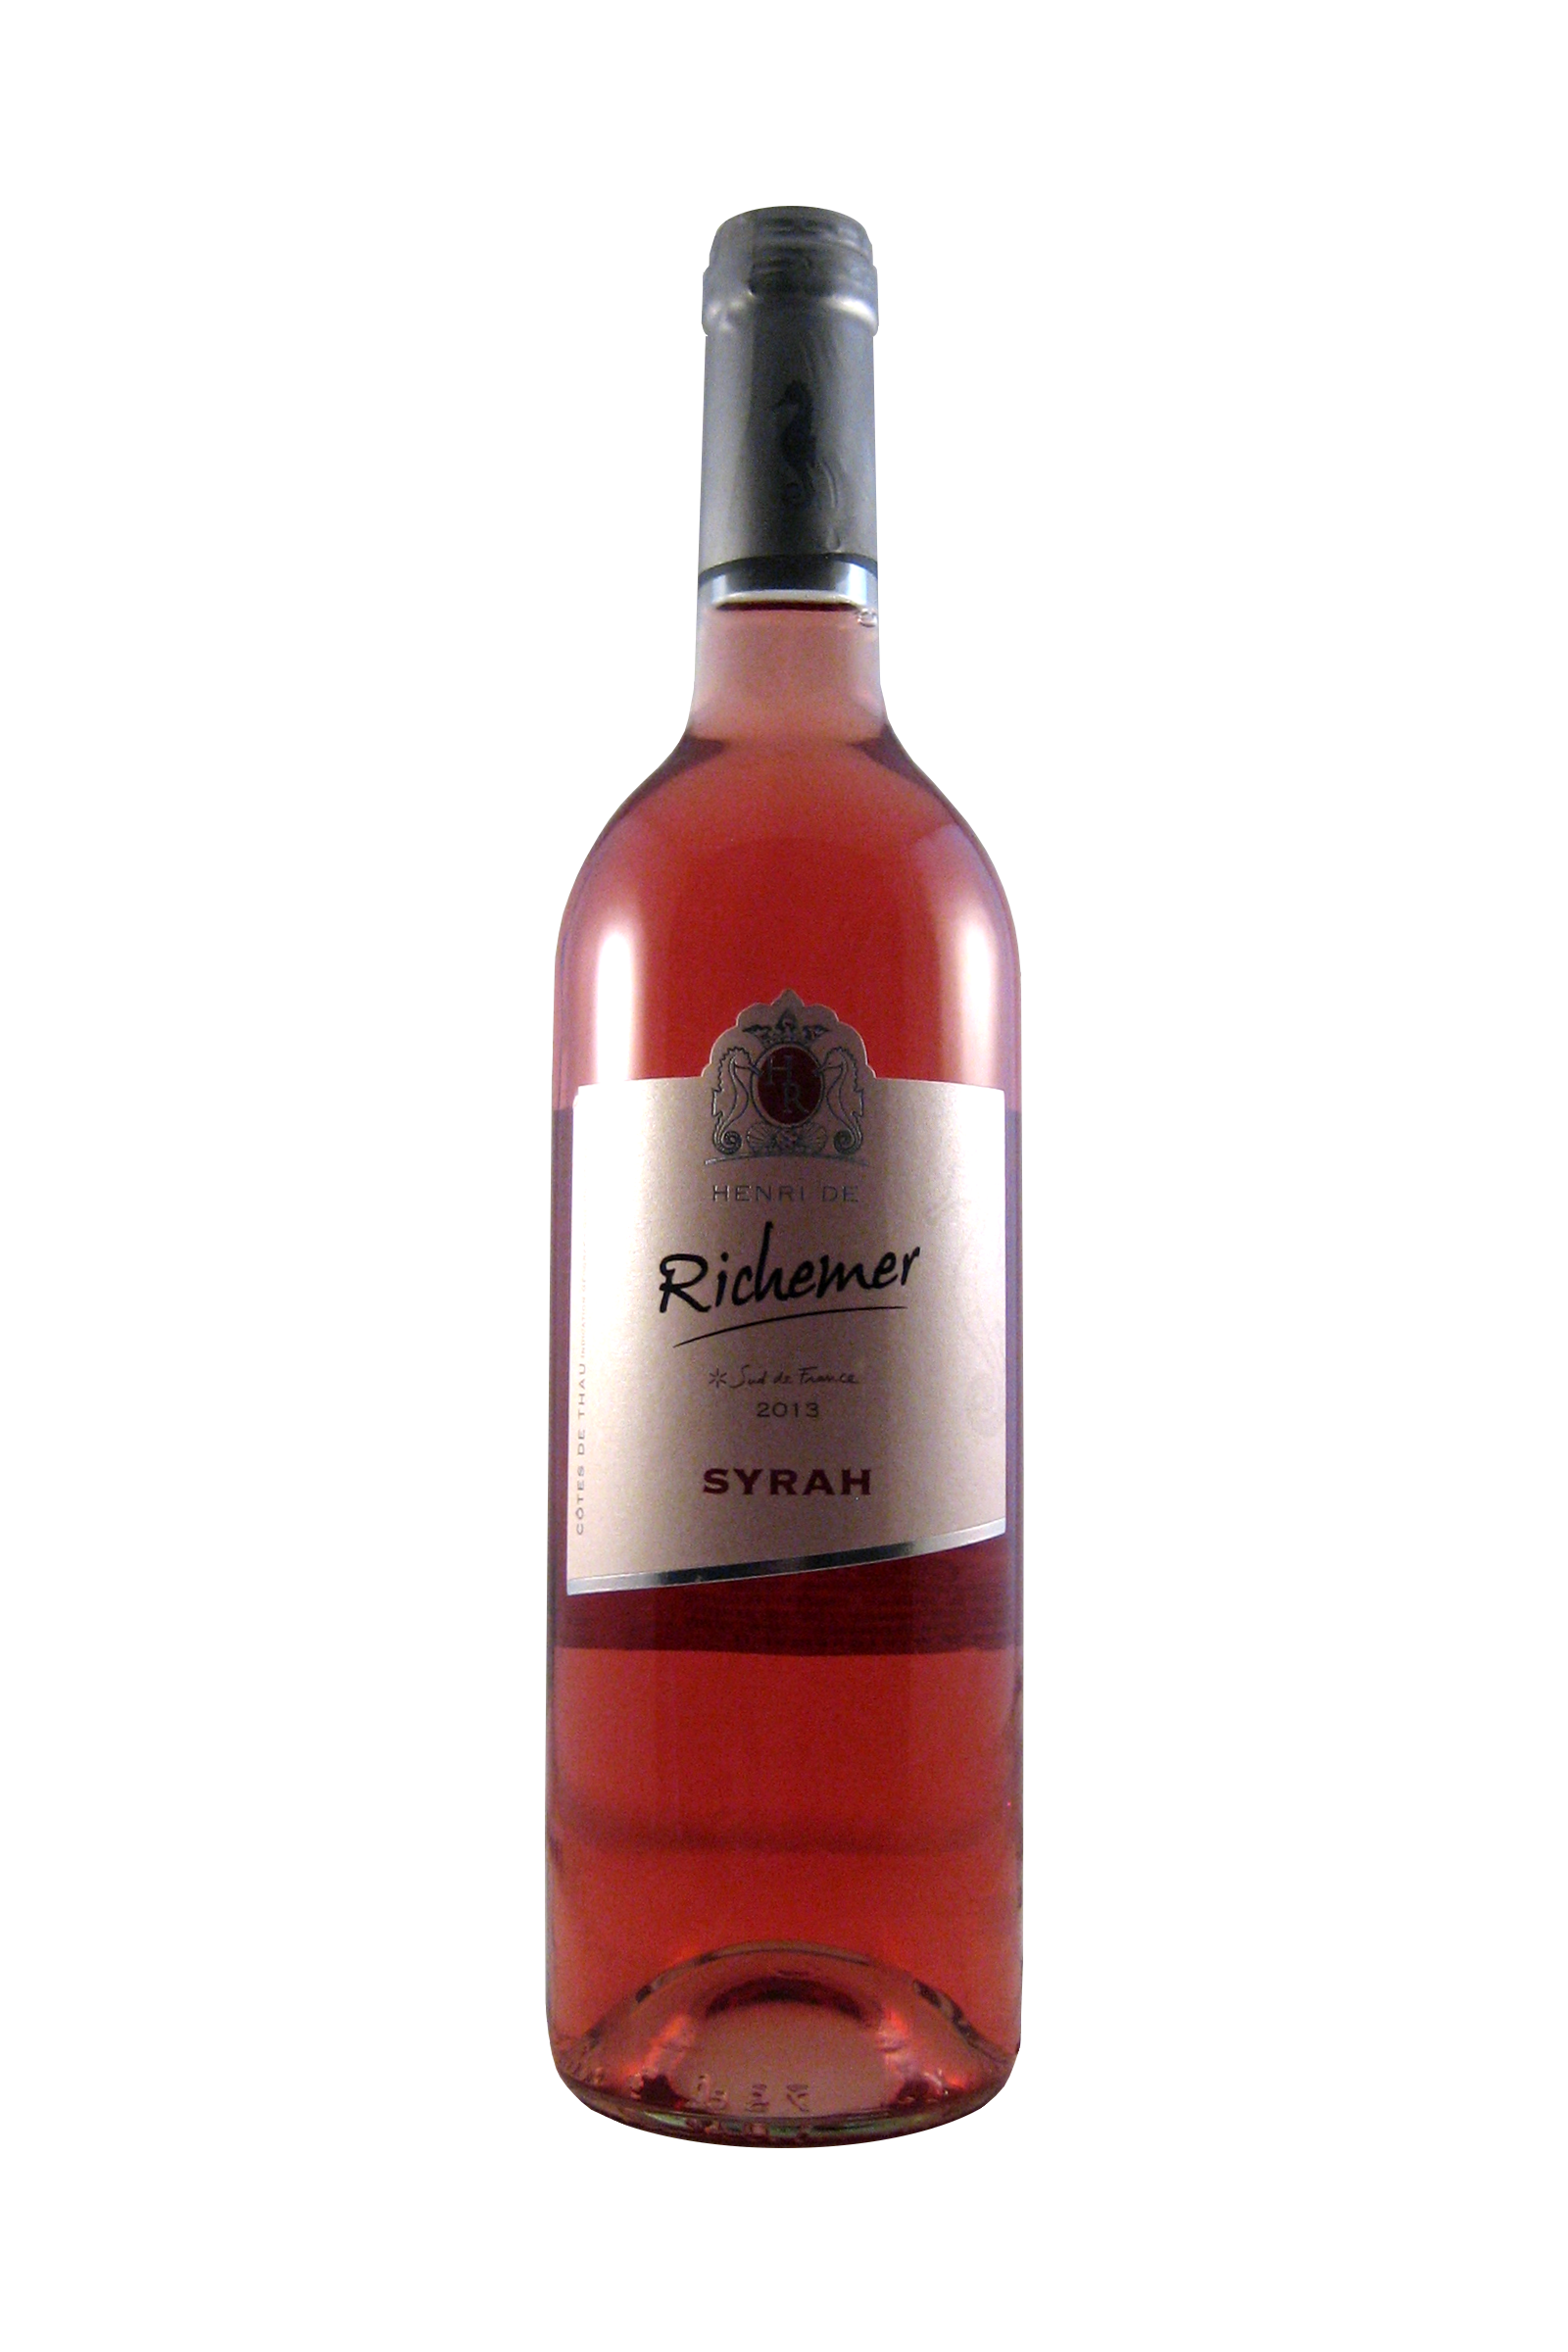 Richemer Syrah rosé Côtes de Thau 2013 Henri de Richemer